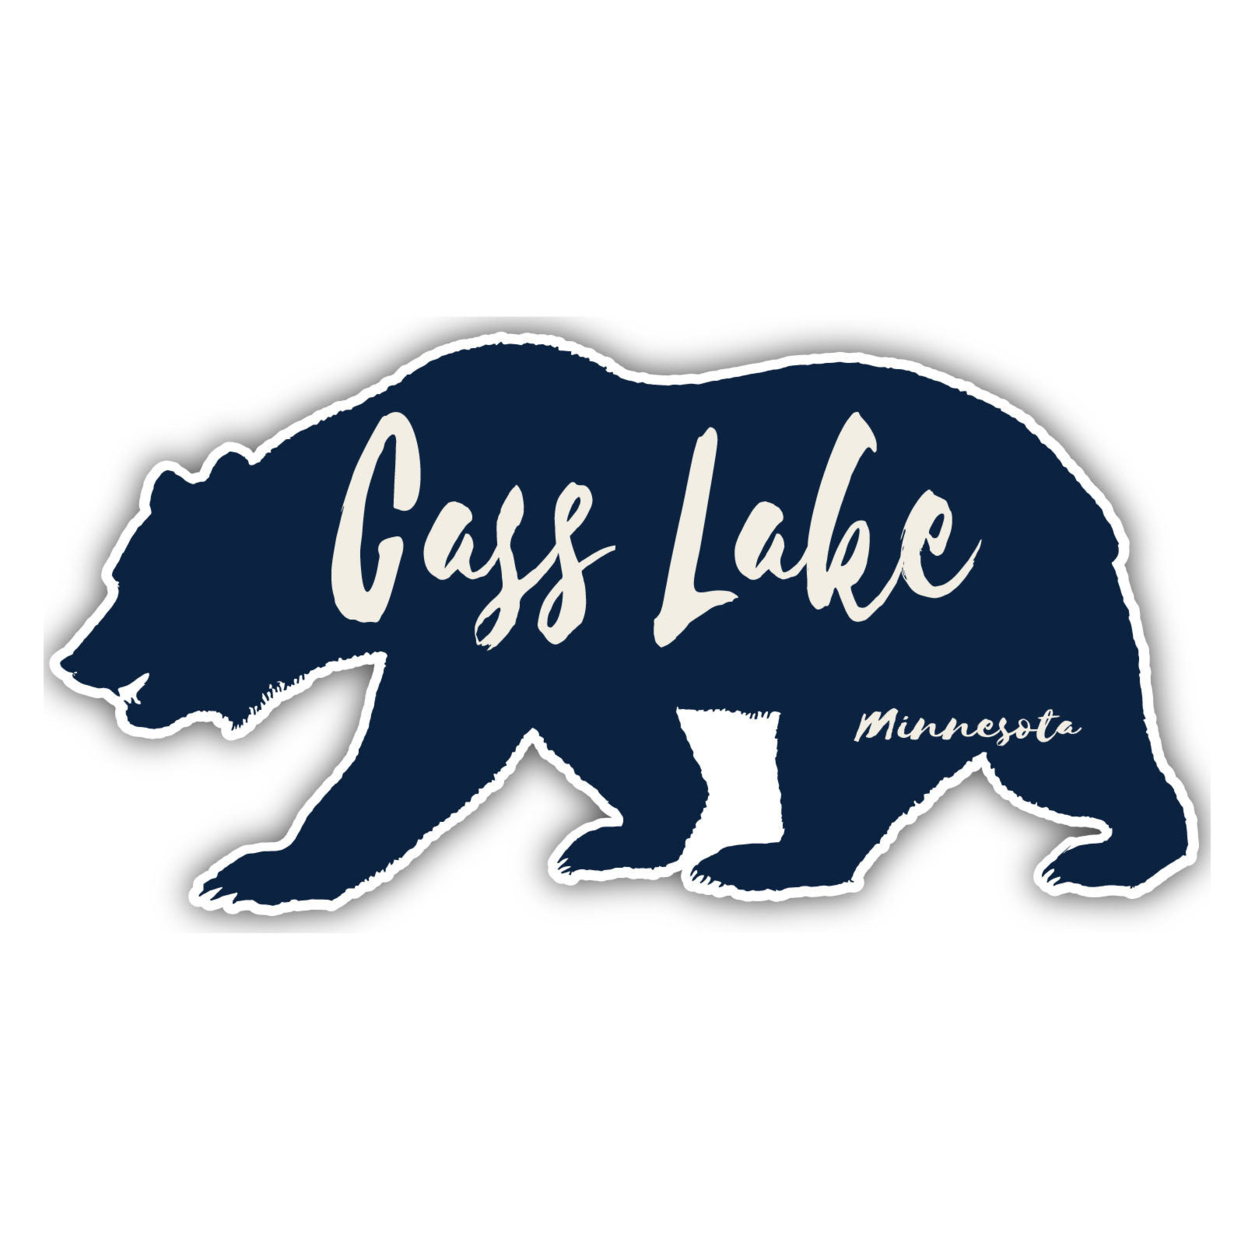 Cass Lake Minnesota Souvenir Decorative Stickers (Choose Theme And Size) - Single Unit, 6-Inch, Tent